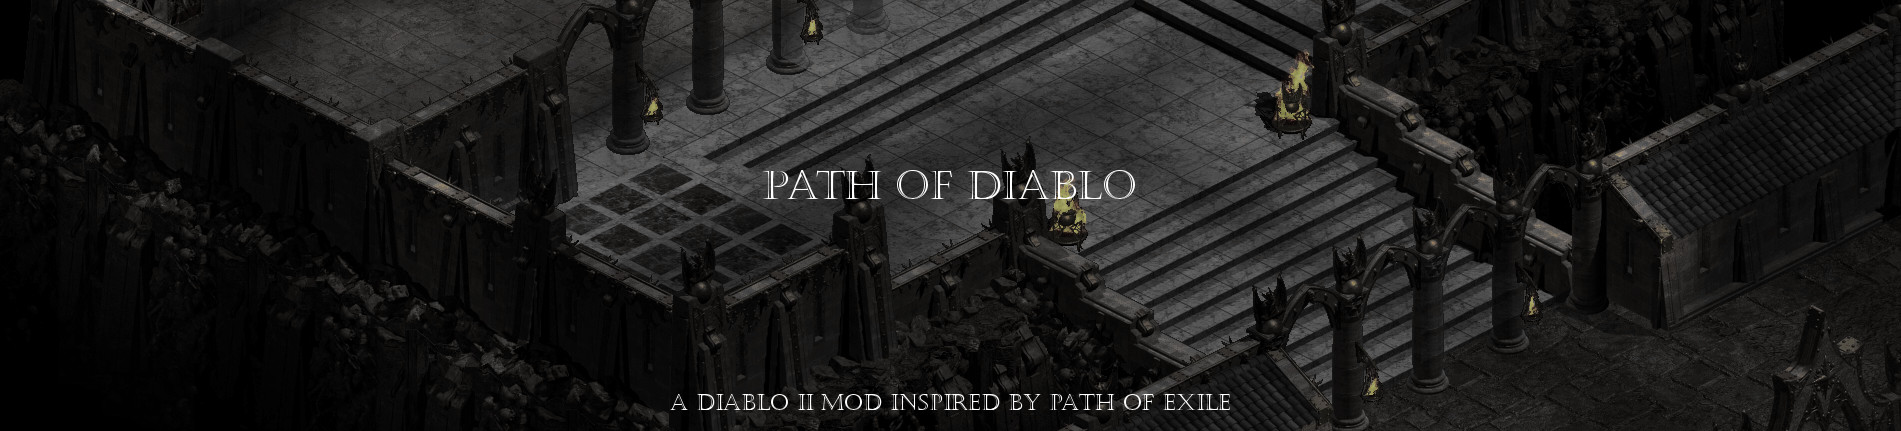 path of diablo servers